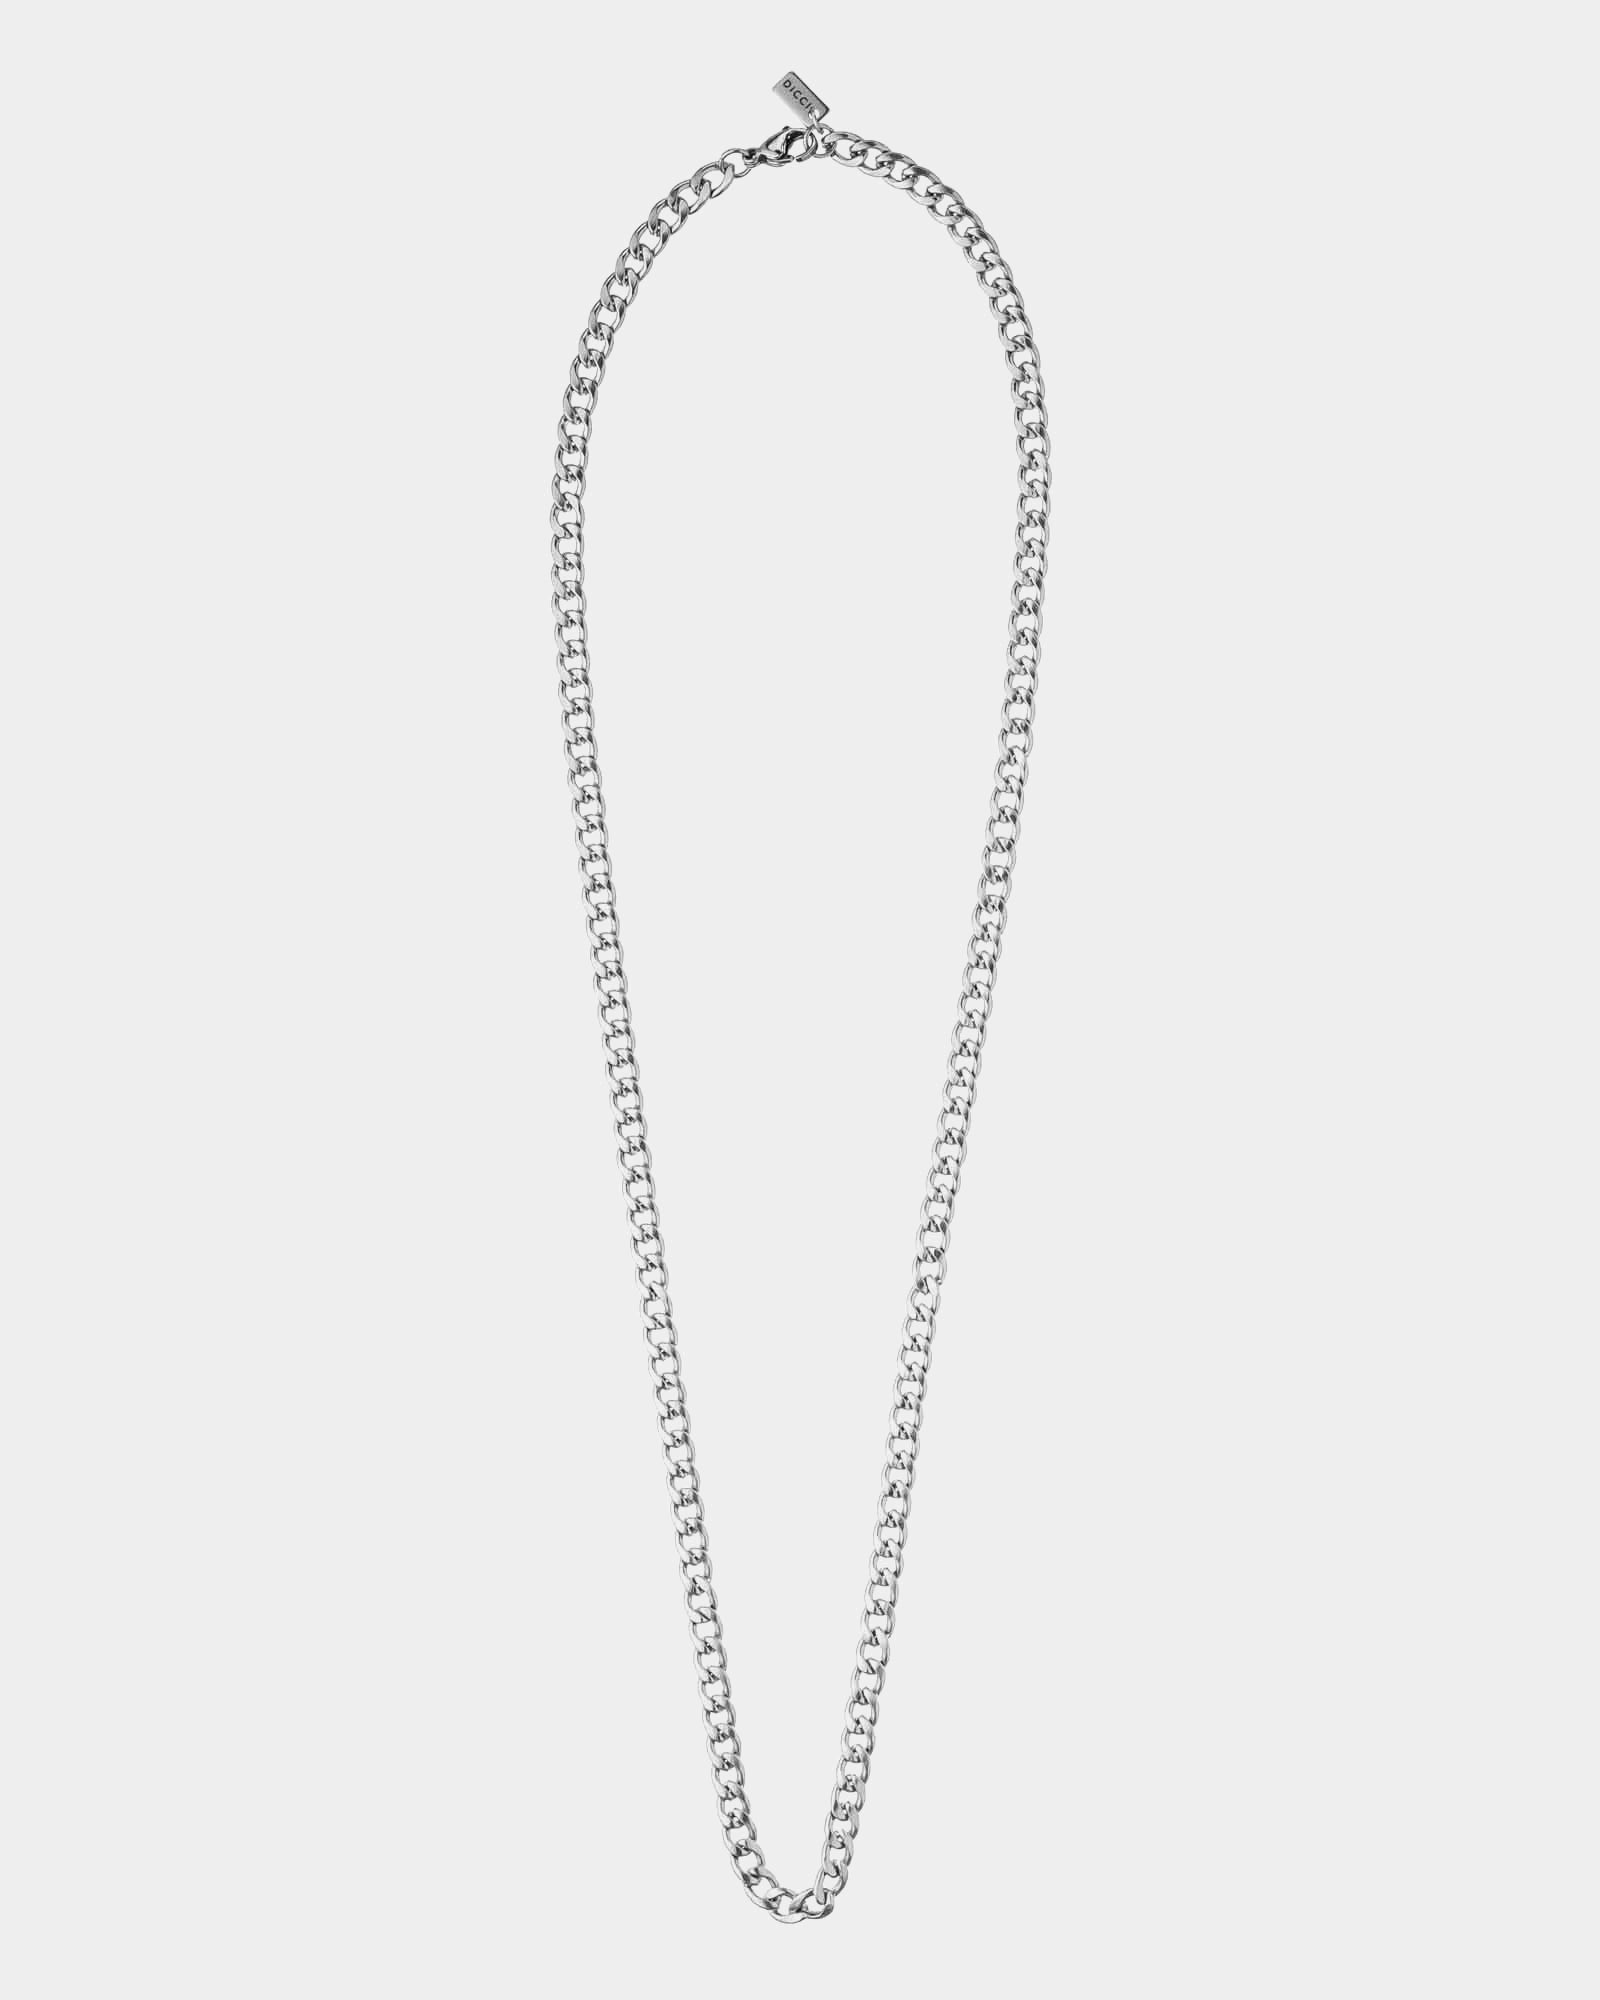 Morovian - Collar de acero inoxidable 'Morovian' - Collares Unisexo Online - Dicci